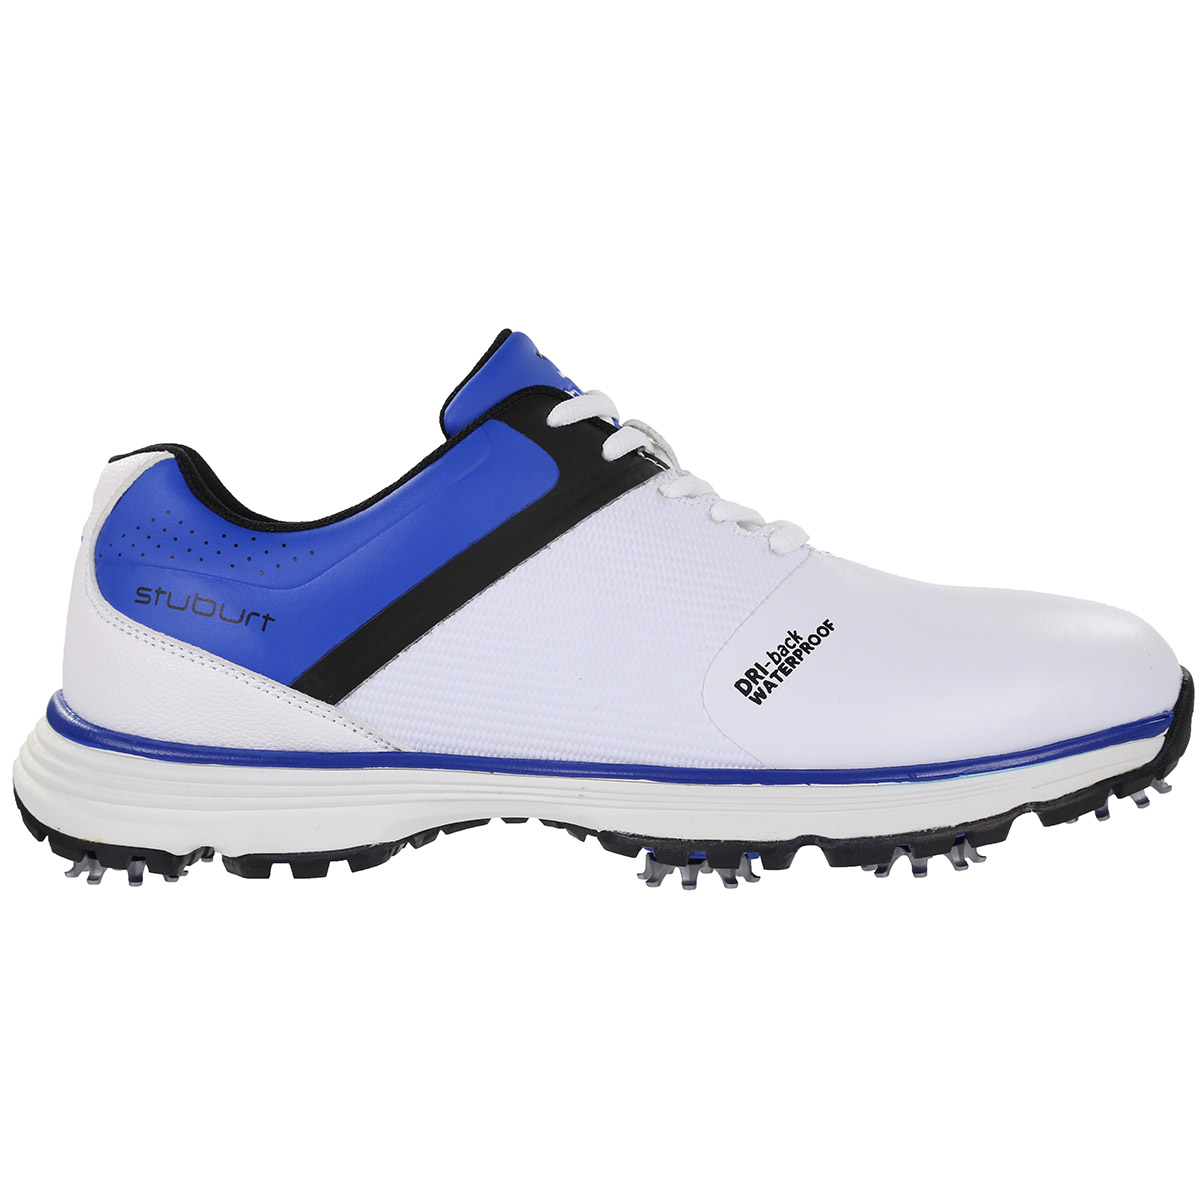 Stuburt PCT-Sport Shoes from american golf